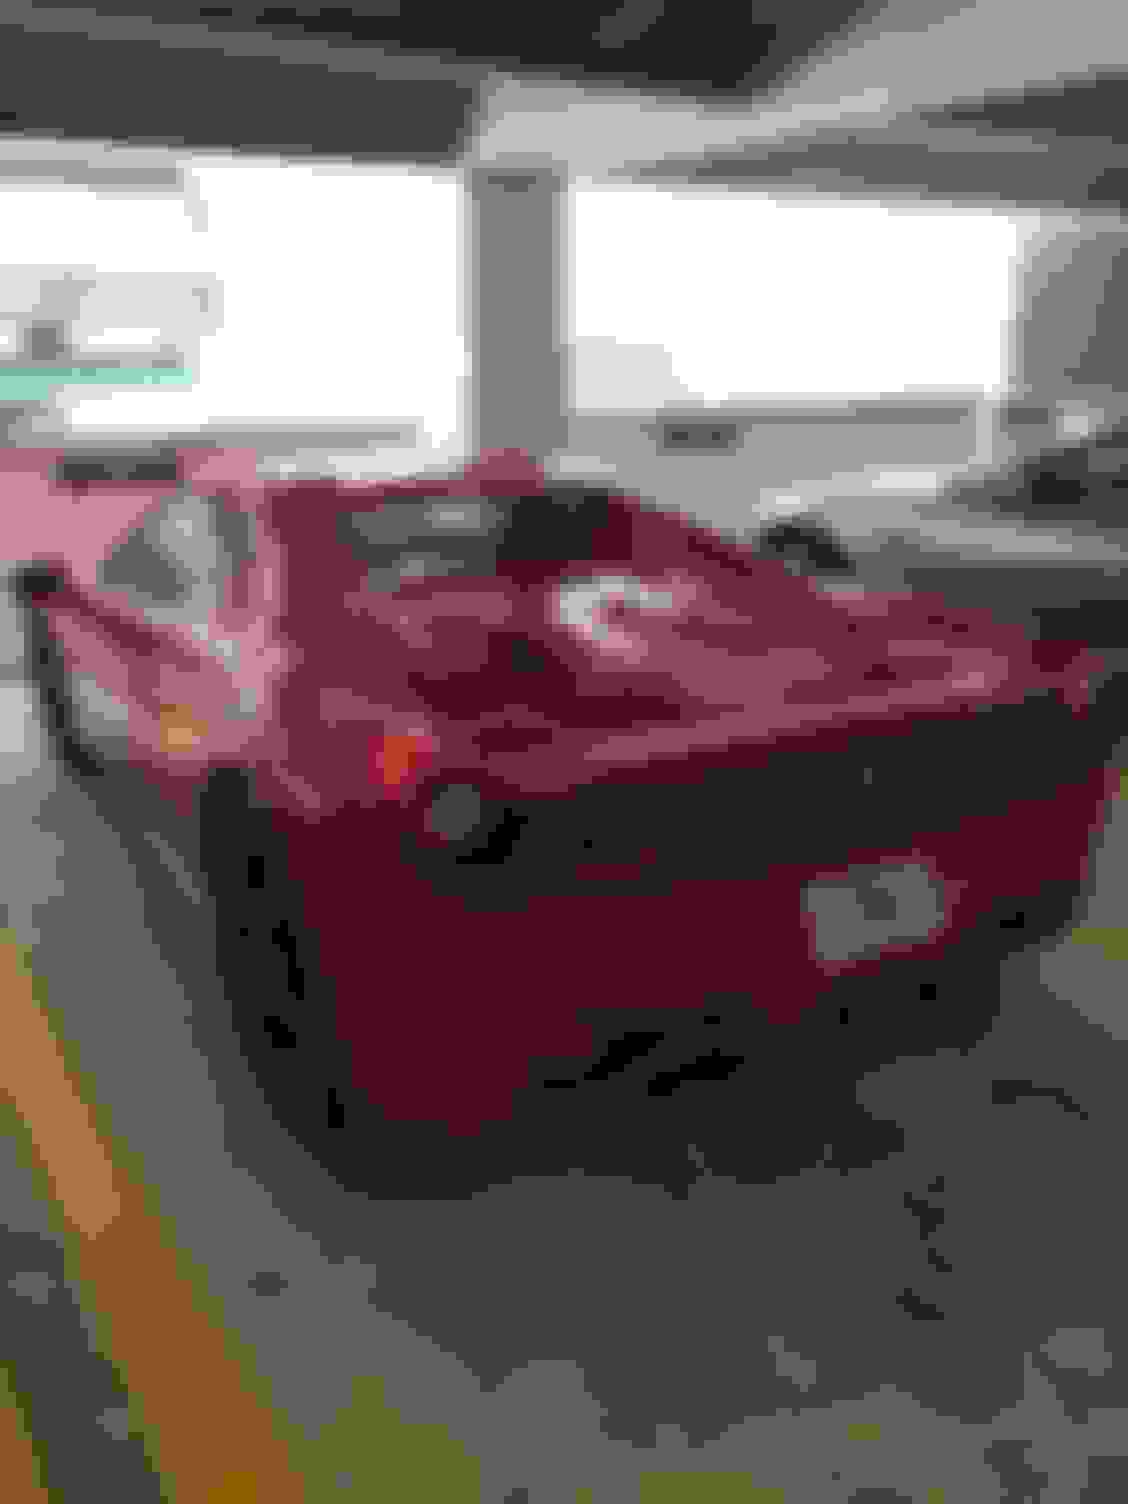 Video: Wild-Ass, Flame-Spitting Ferrari F40 – News – Car and Driver